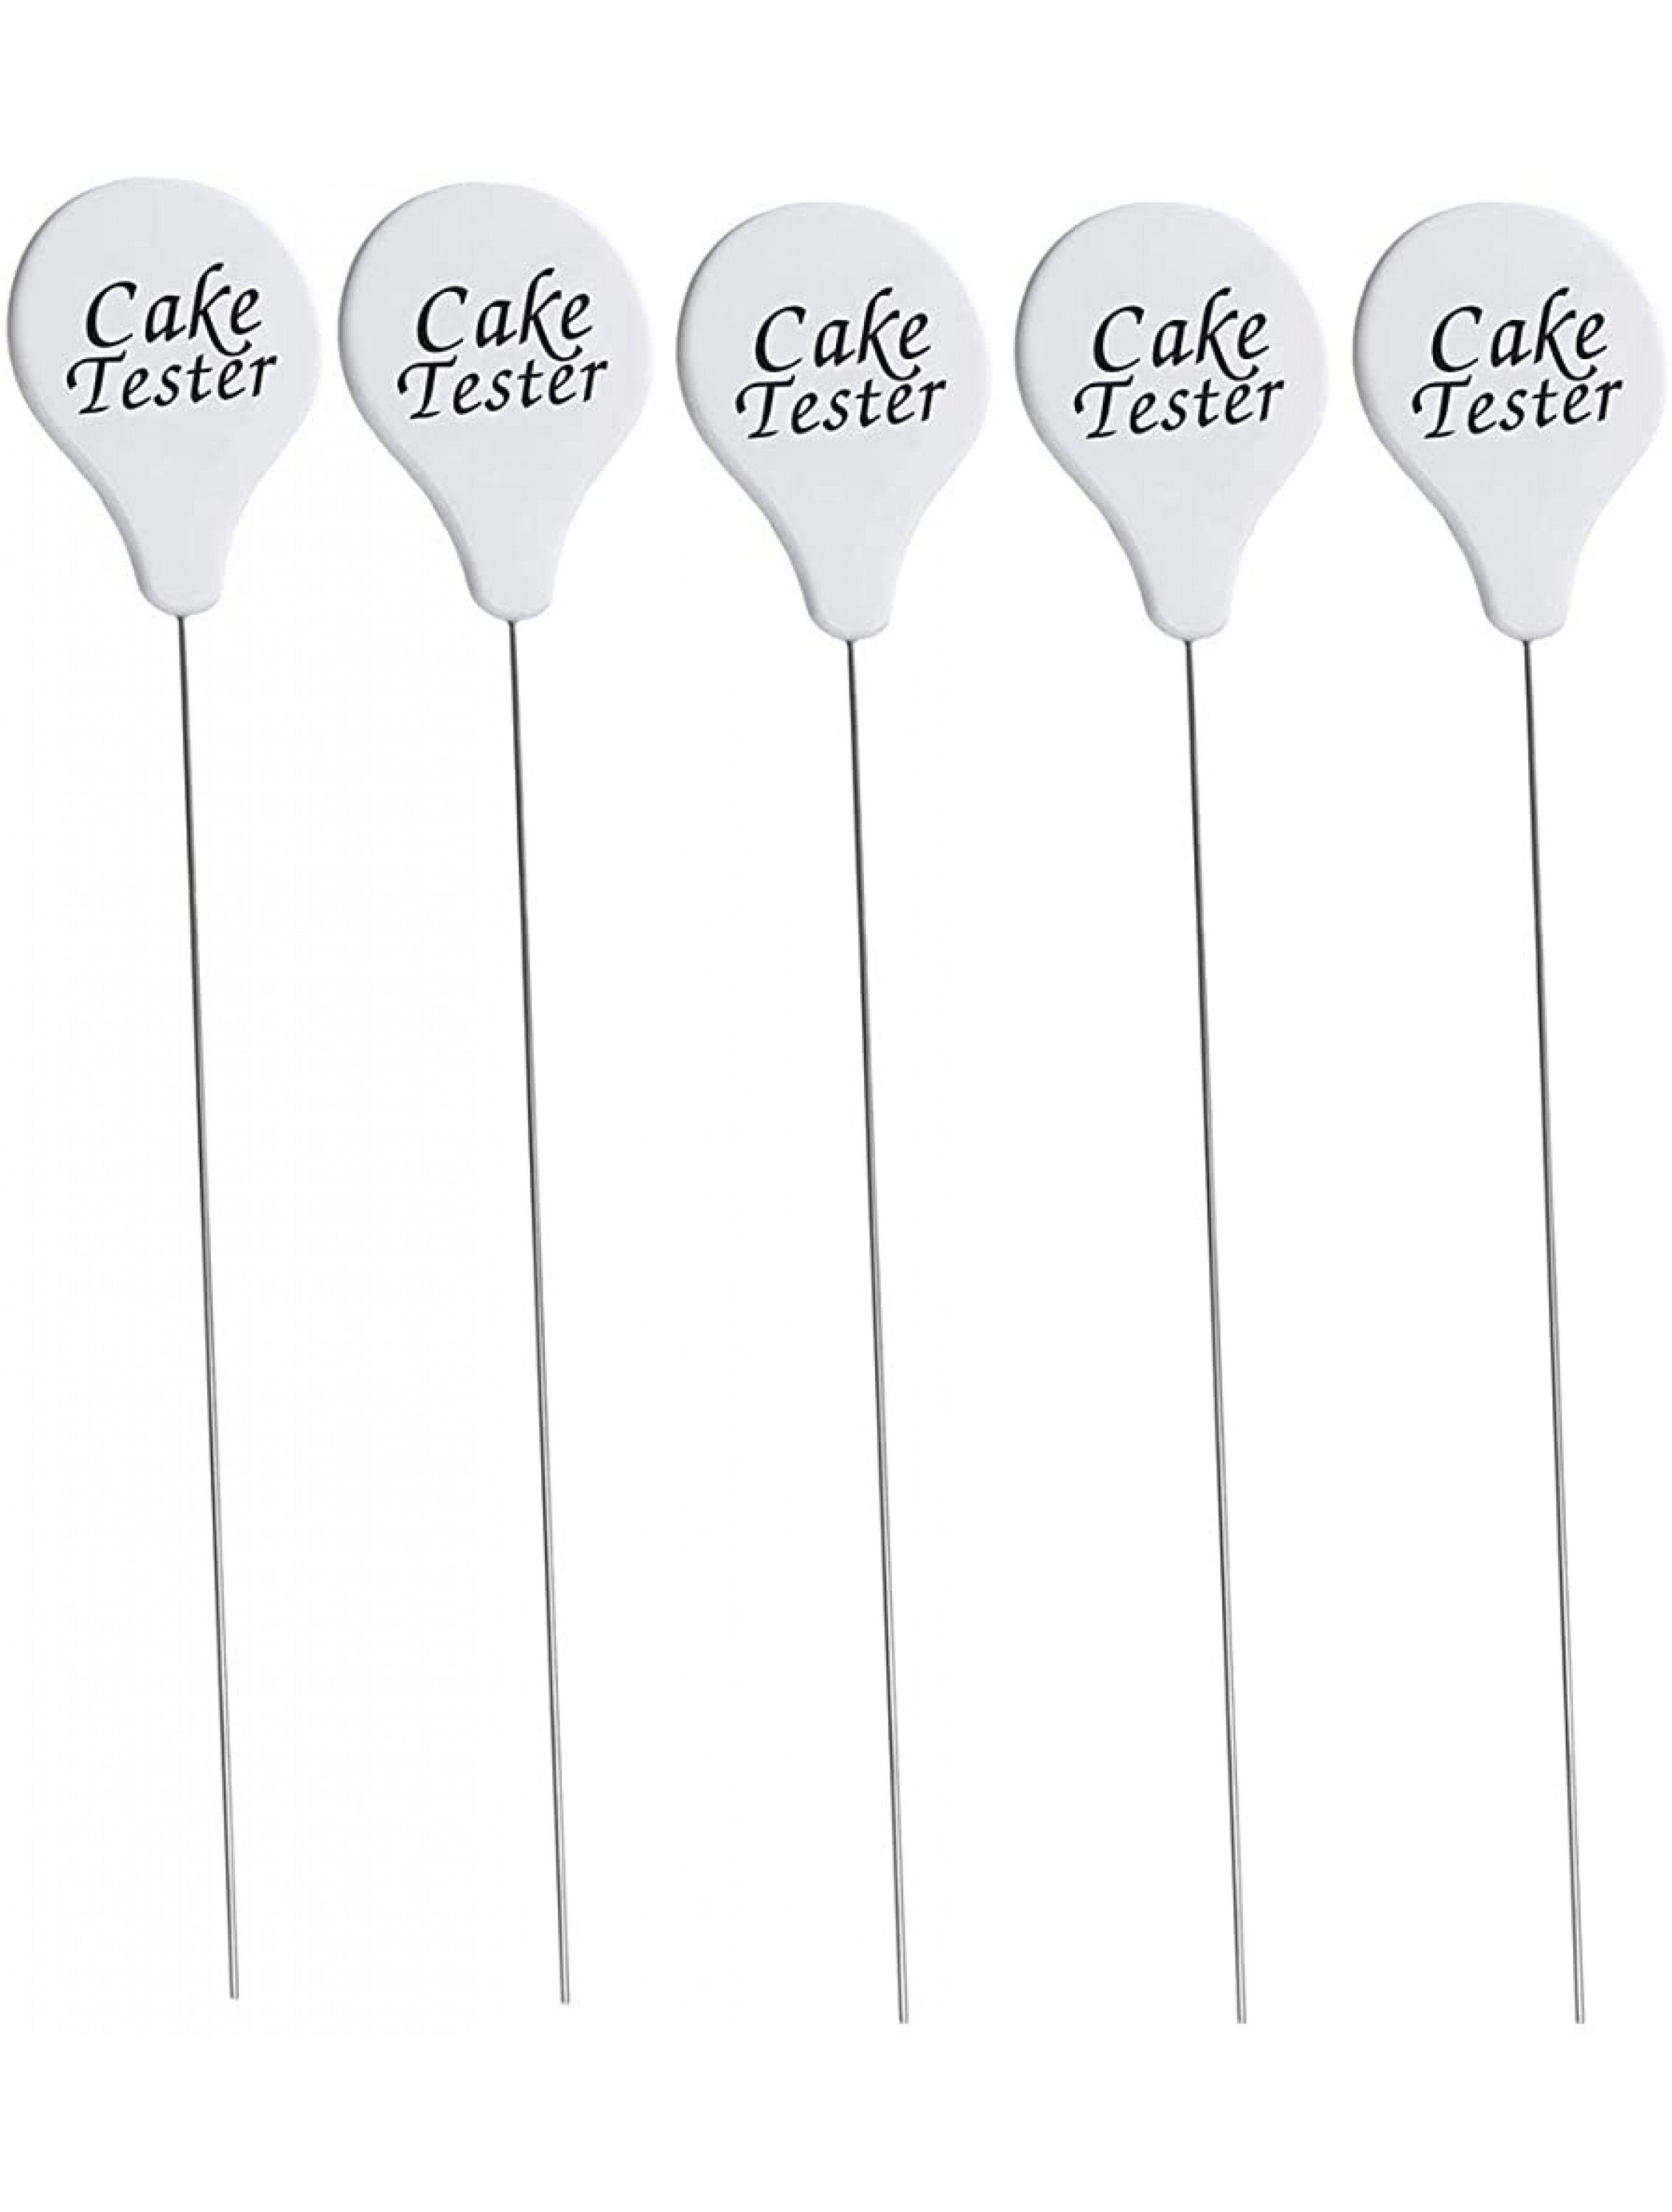 5Pcs Stainless Steel Cake Tester Reusable Metal Cake Testing Needle Sticks Skewer Probe Pin for Bread Biscuit Muffin Pancake Cake Kitchen Home Baking Tools White - BK039WEFW